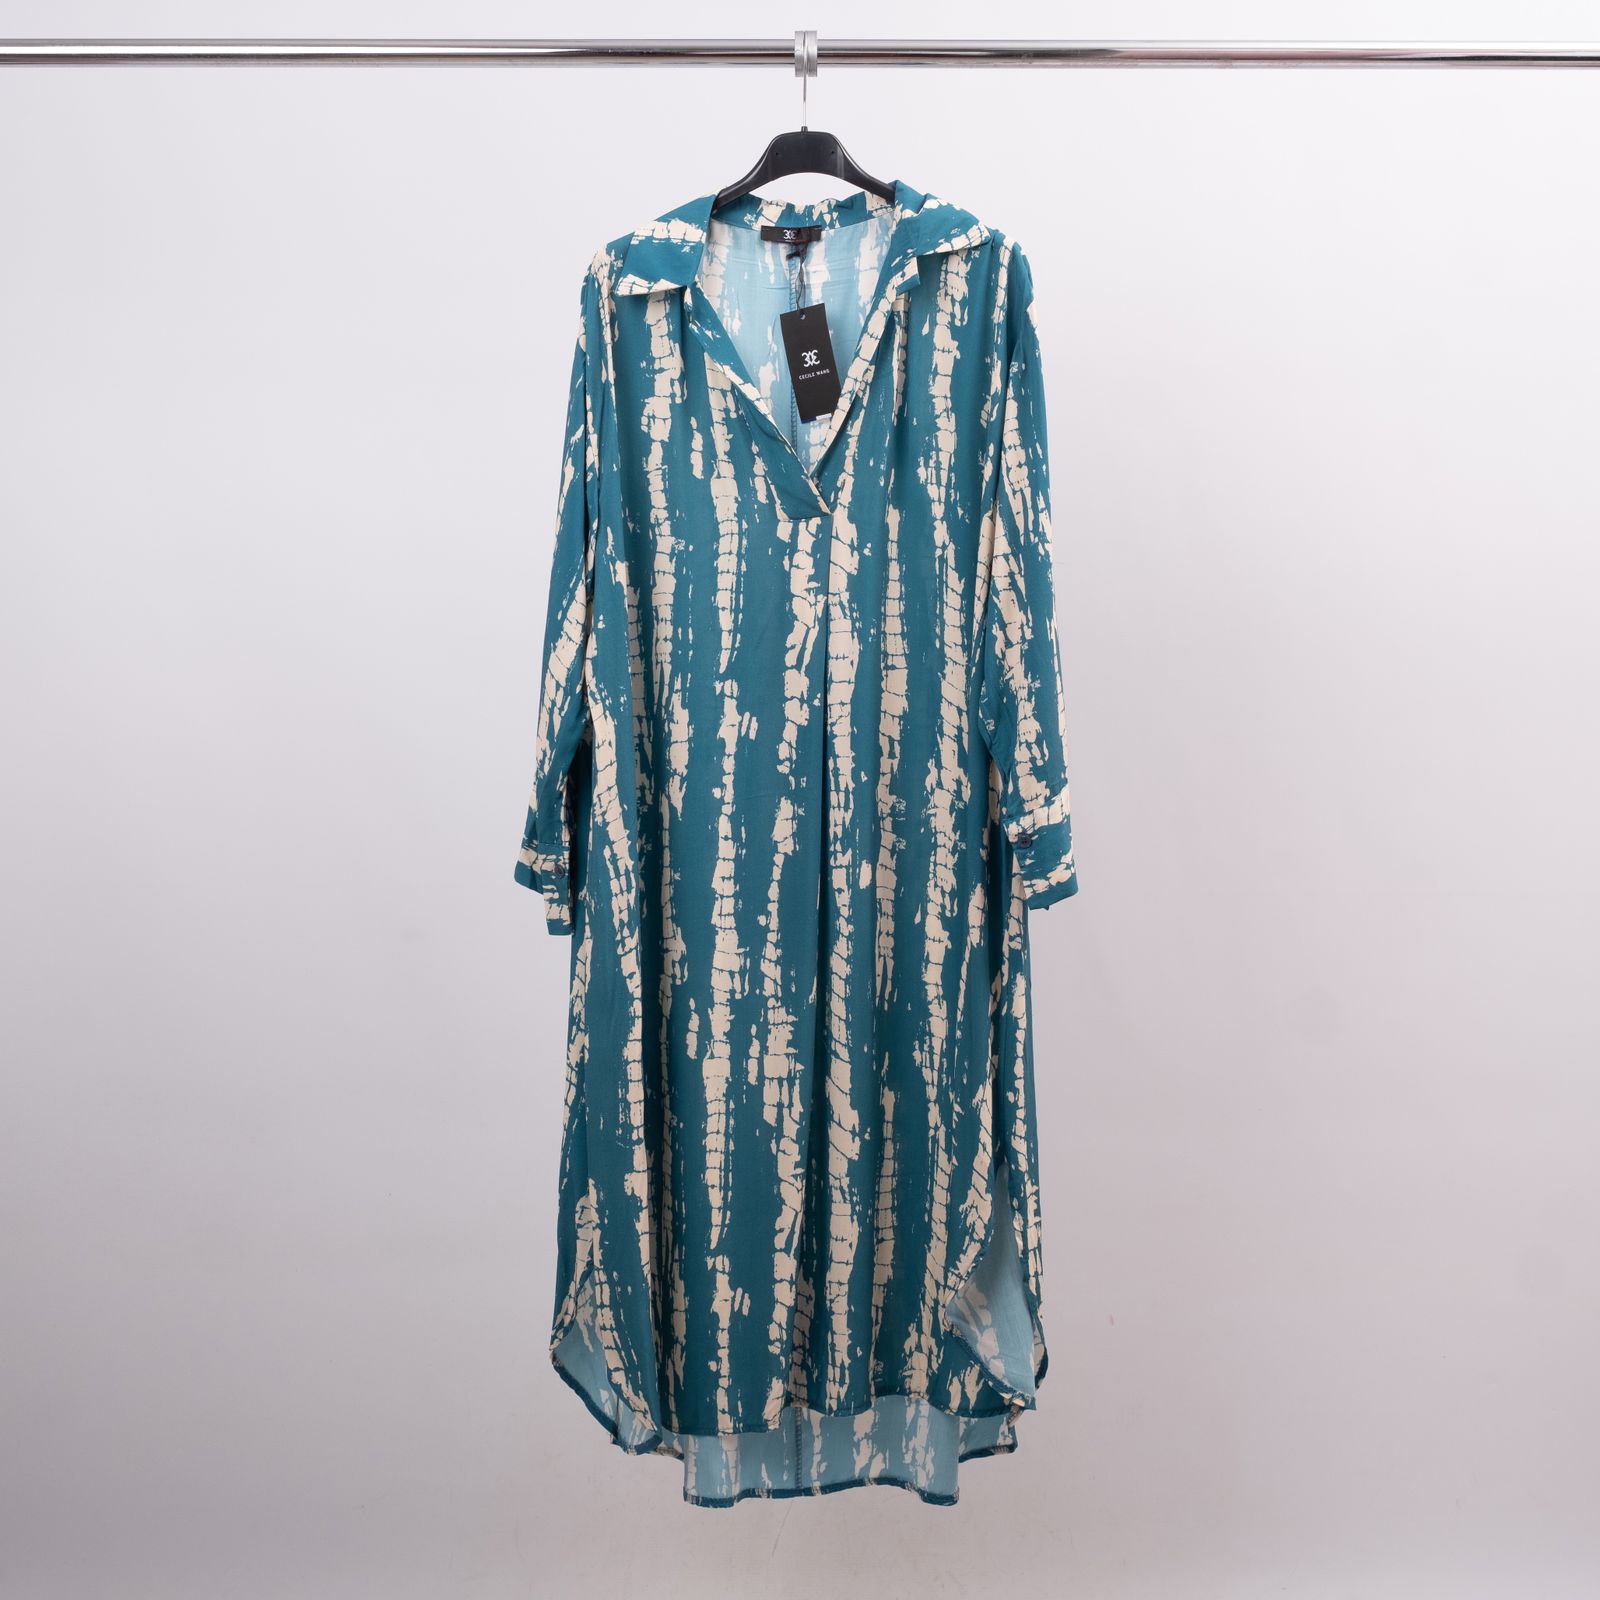 Robe JULIA fabriqué italie perle des iles 974 taille unique robe tunique manche longue